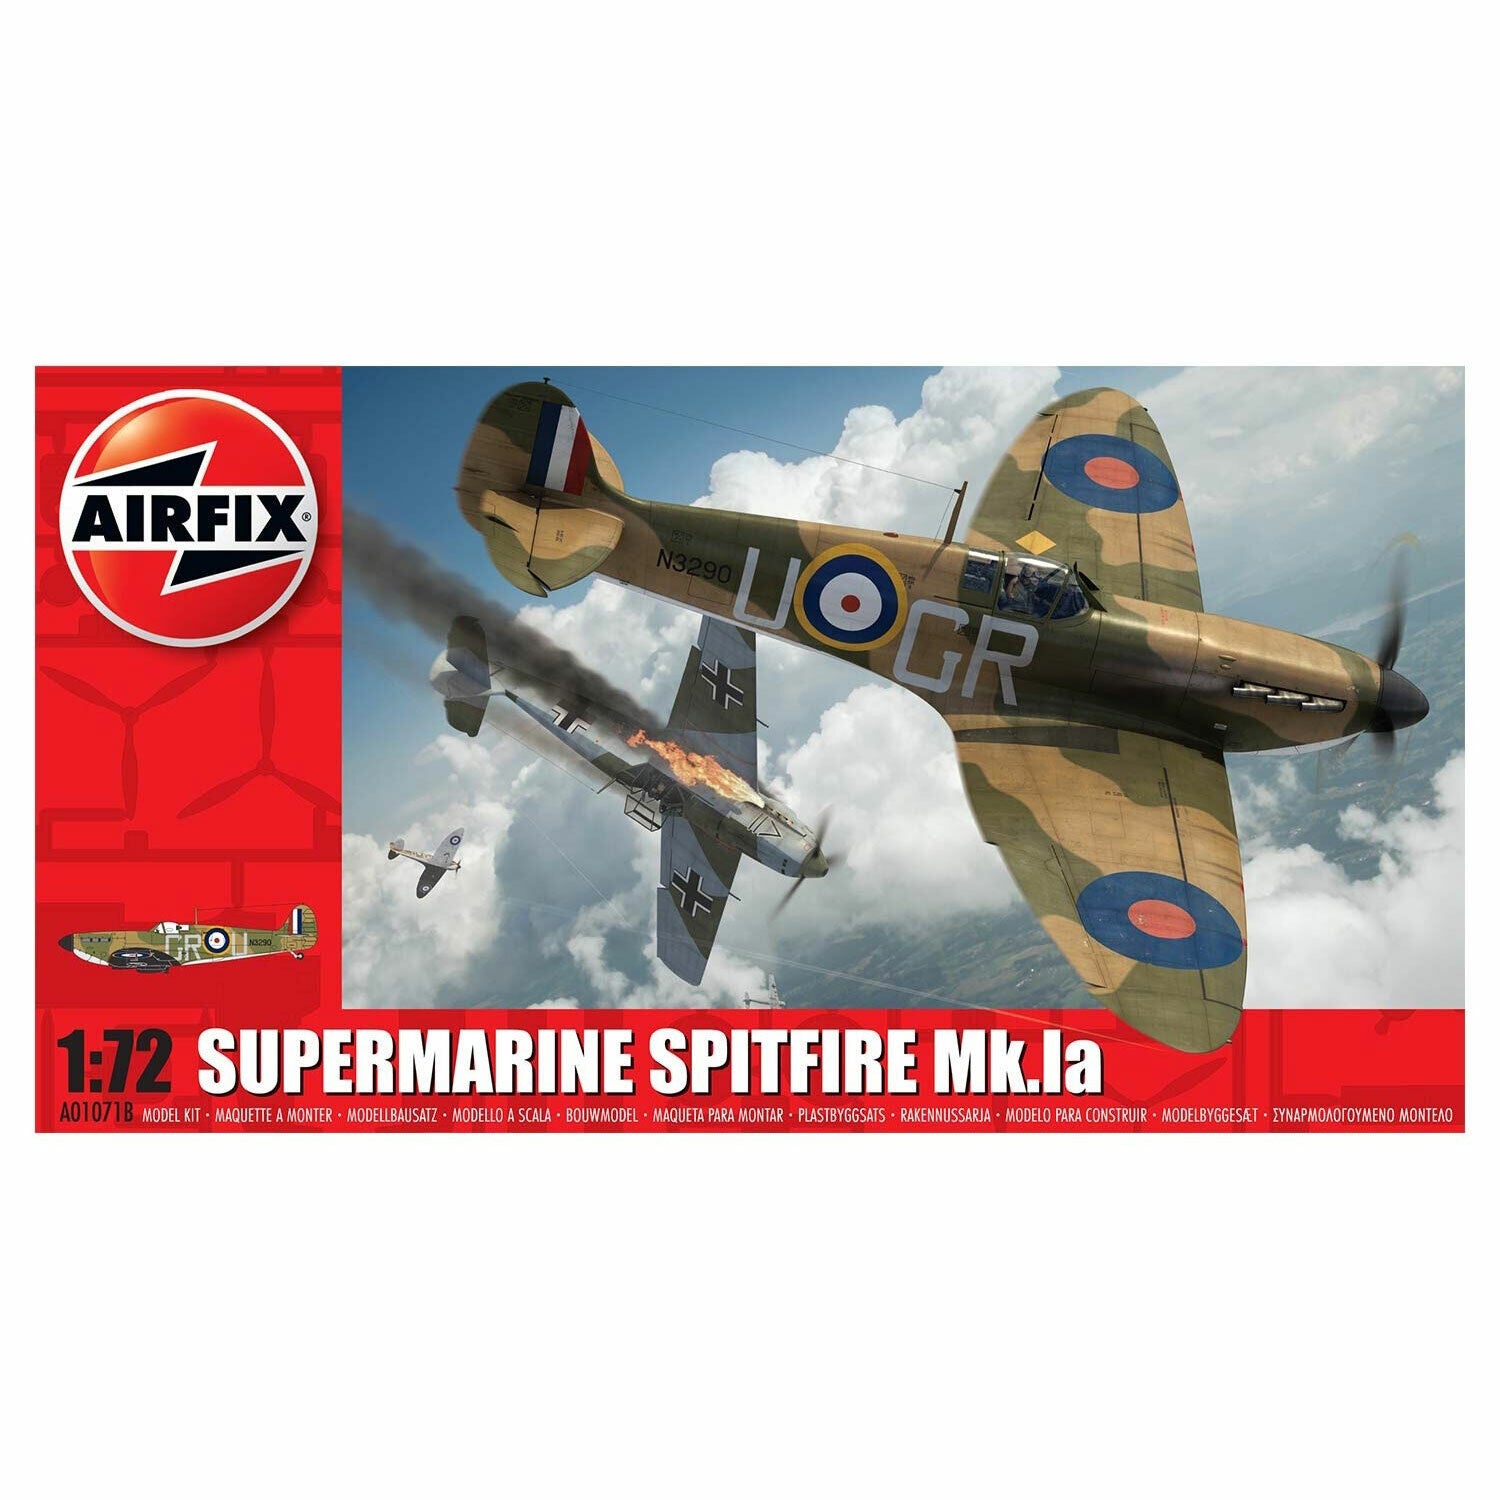 New Airfix 1:72 Scale Spitfire Mk.Ia Model Kit A01071B